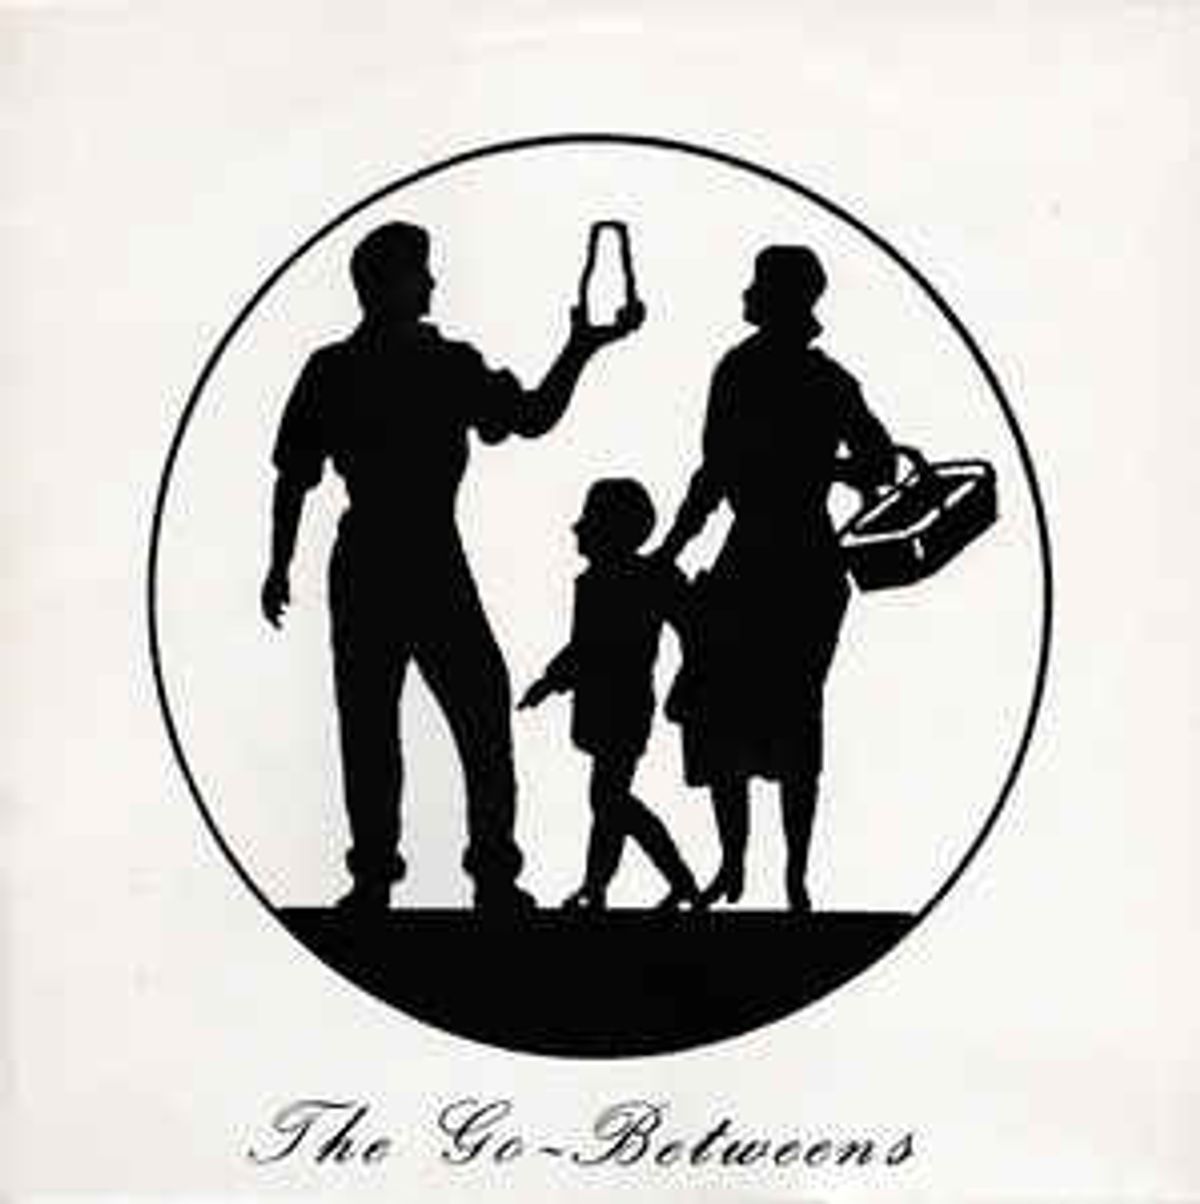 #Go-Betweens - The Go-Betweens - Streets Of Your Town (1988)